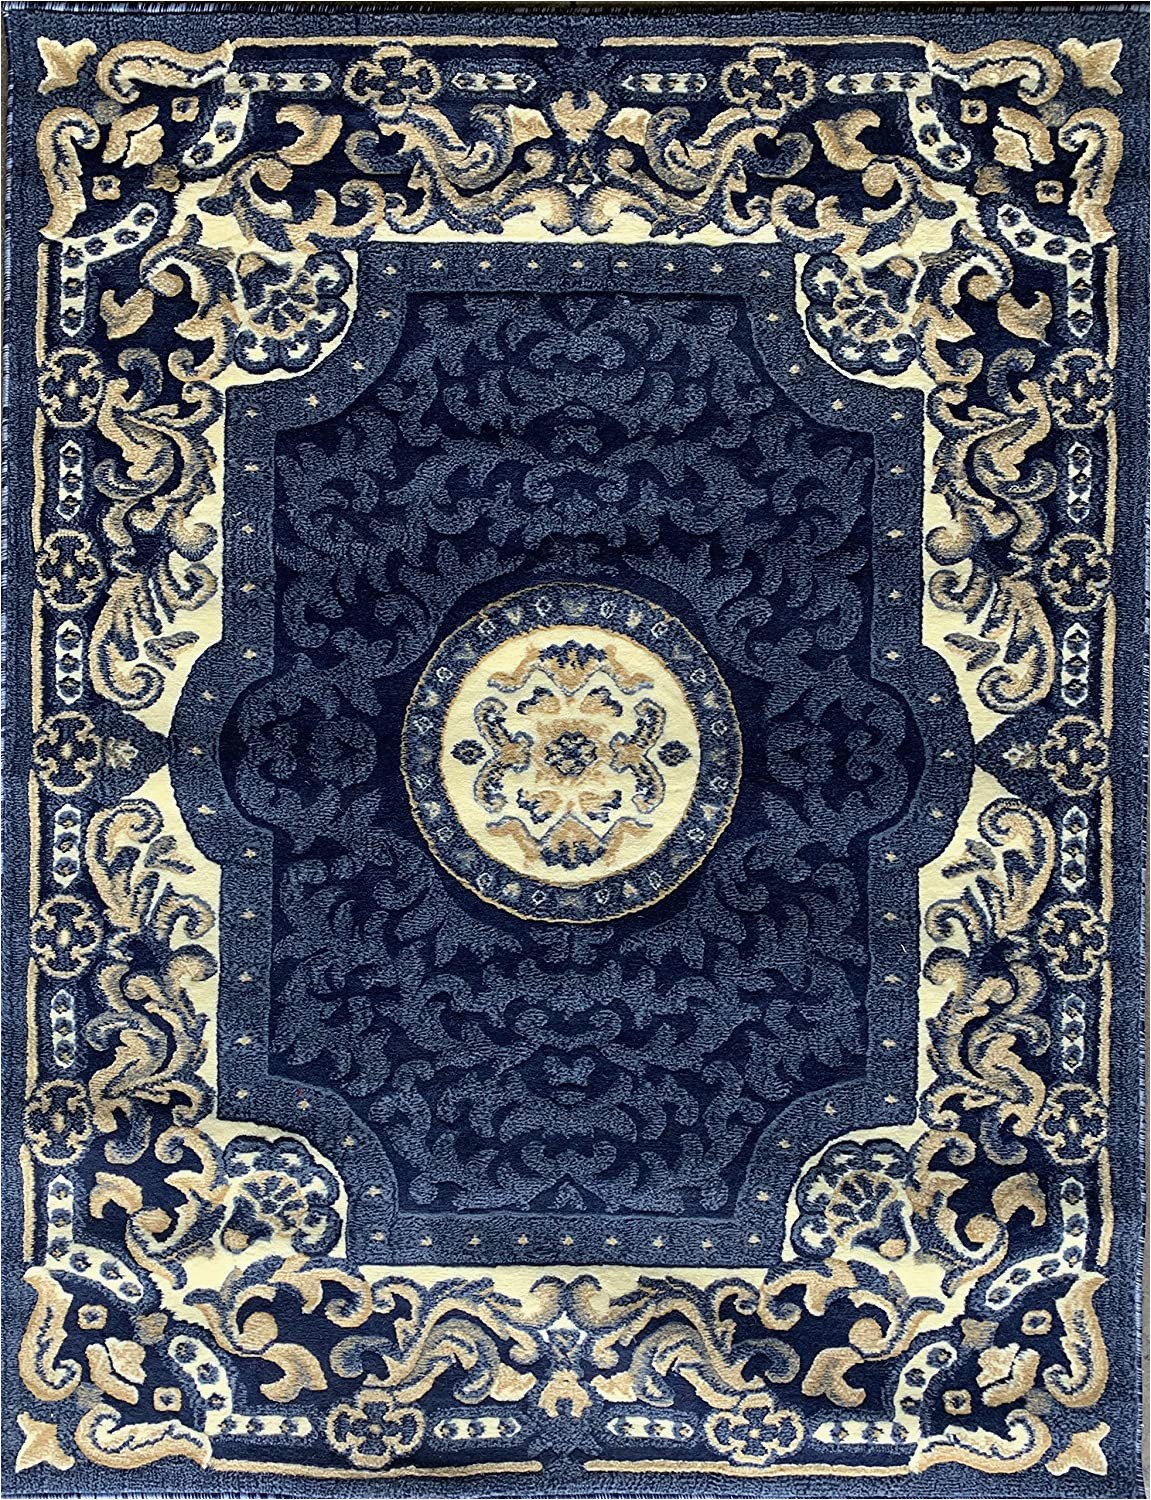 Blue oriental area Rugs Traditional Persian oriental area Rug Dark Navy Blue Beige Carpet King Design 101 8 Feet X 10 Feet 6 Inch